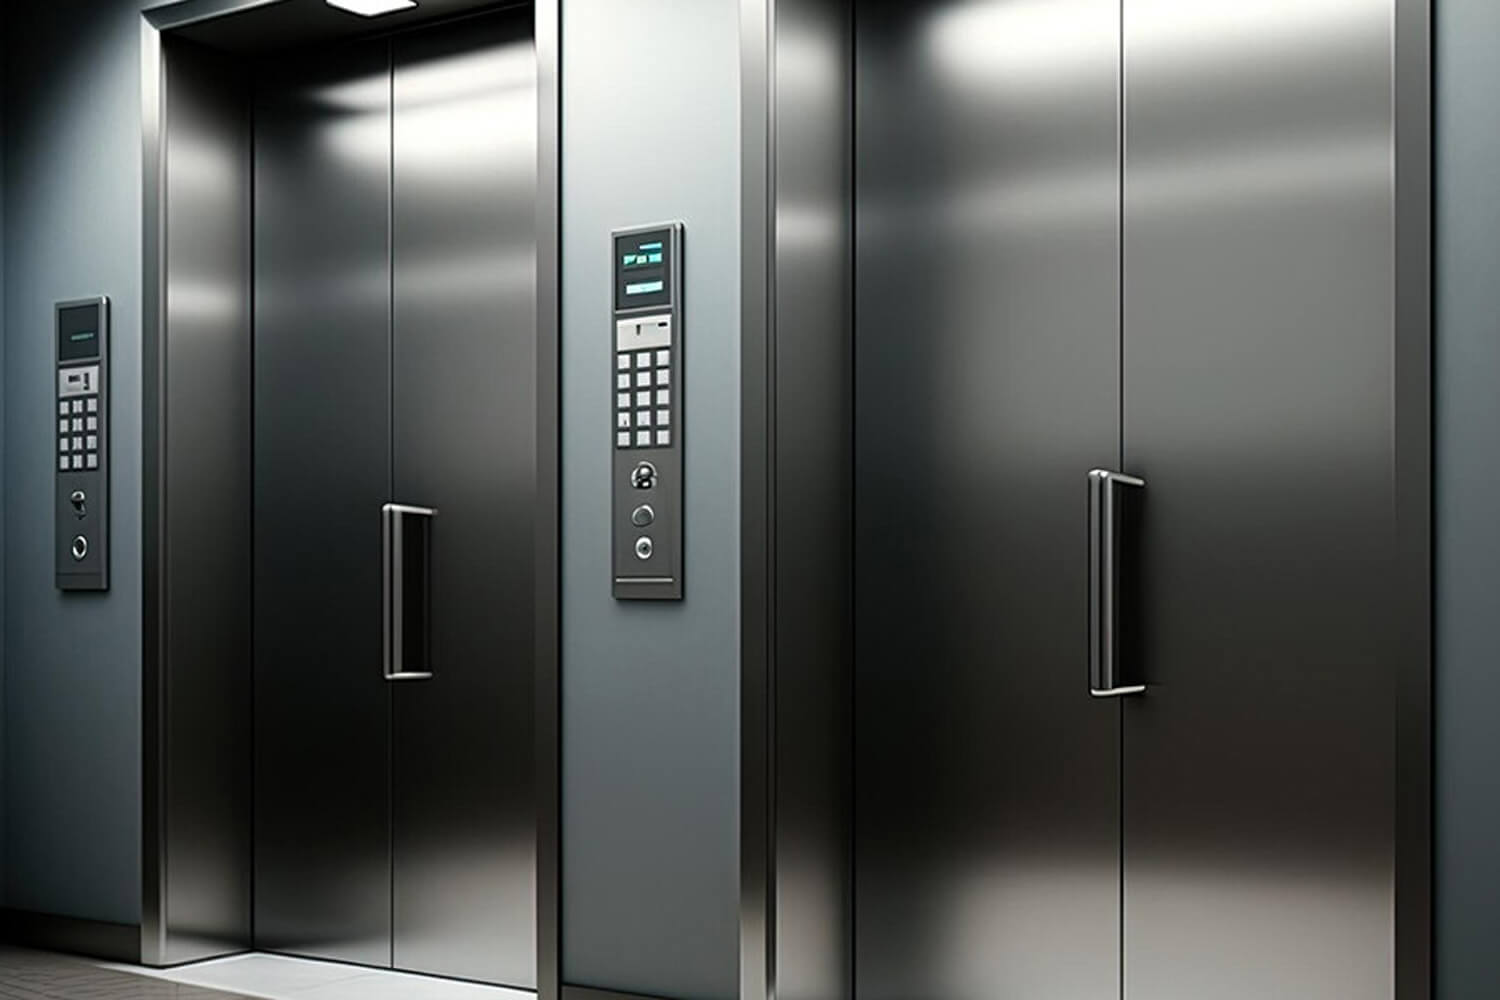 Elevator upgrades